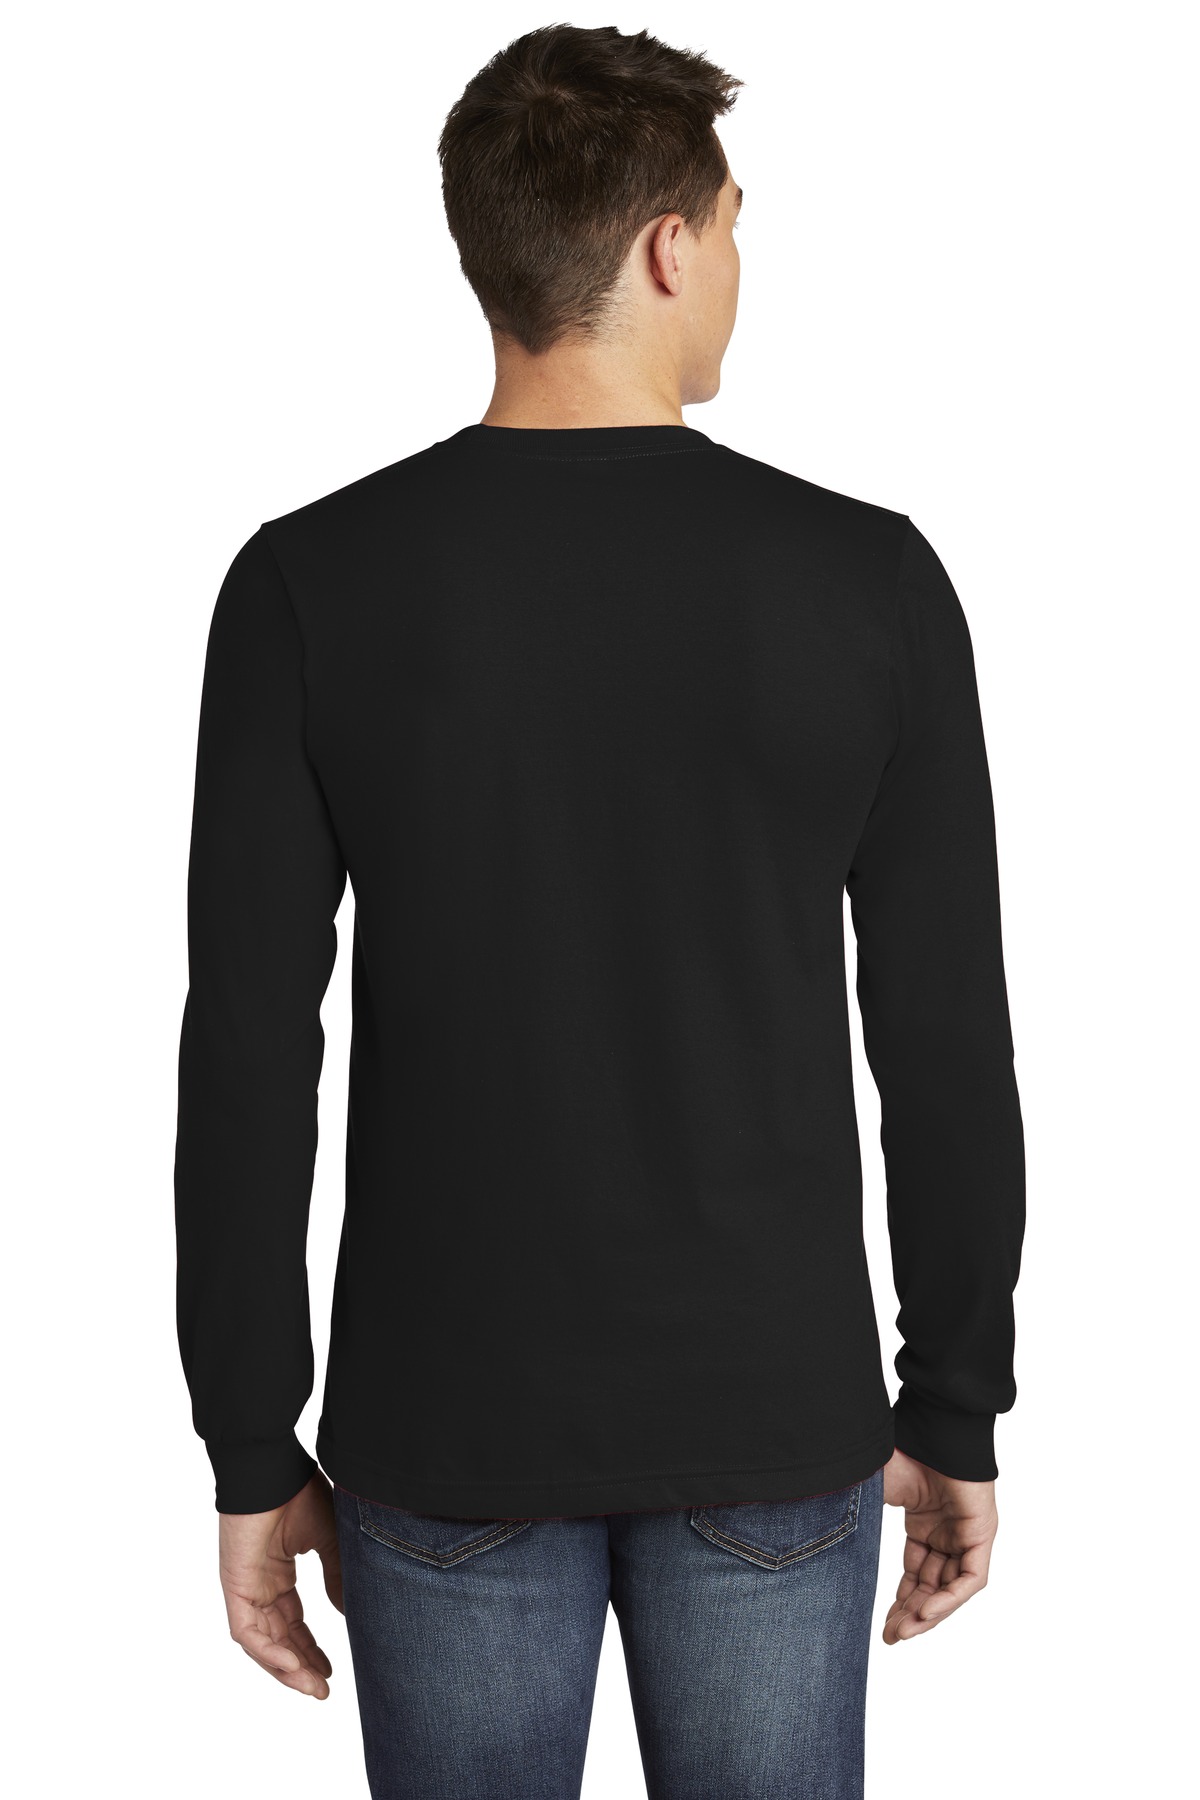 American Apparel ® Fine Jersey Long Sleeve T-Shirt. 2007W - Custom ...